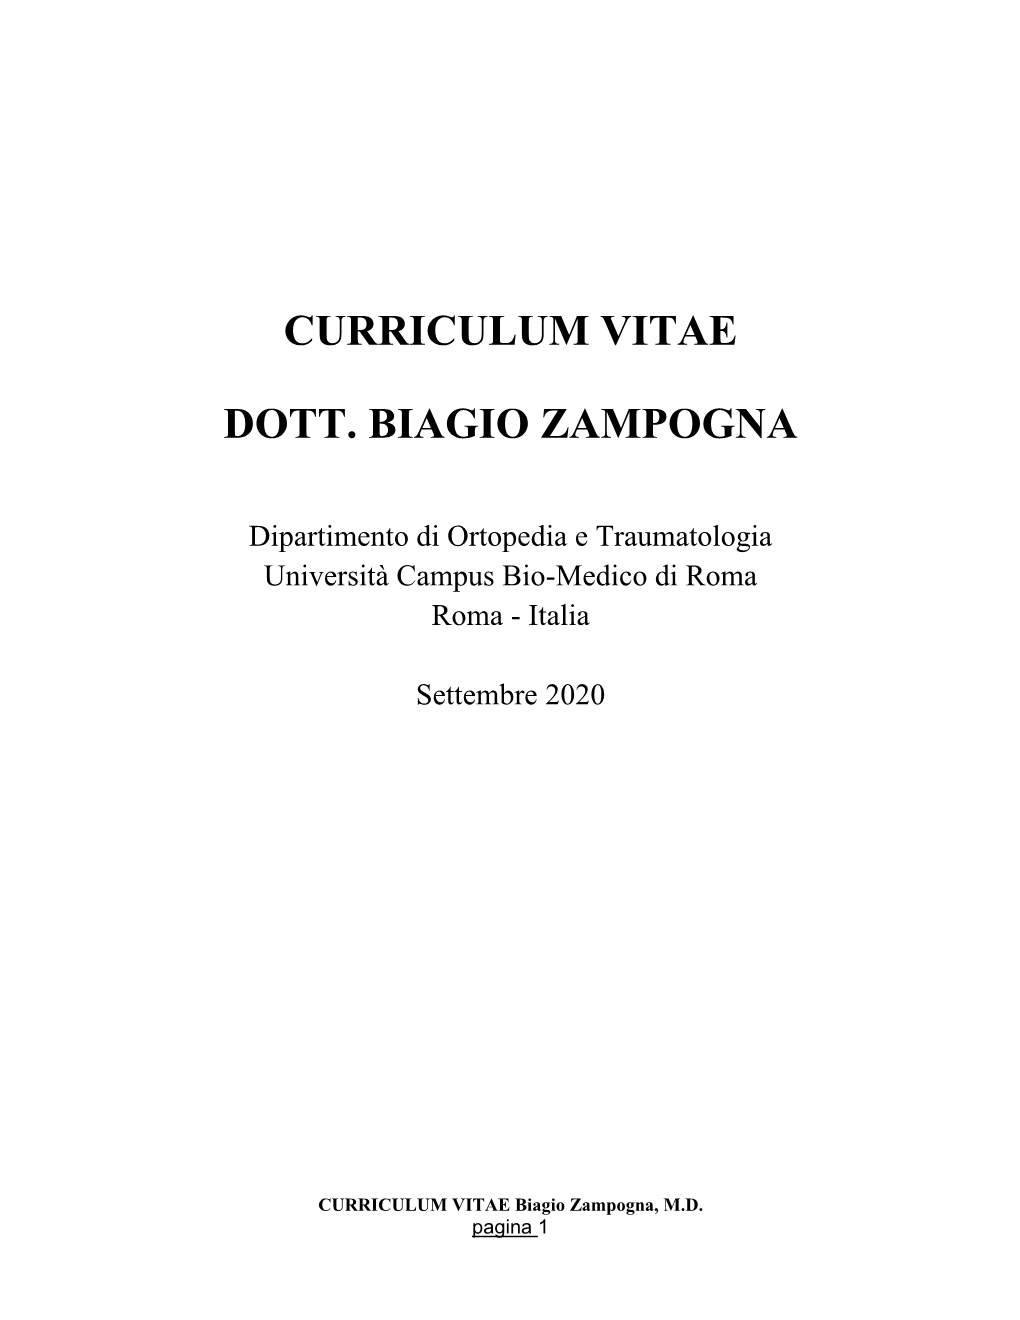 Curriculum Vitae Dott. Biagio Zampogna